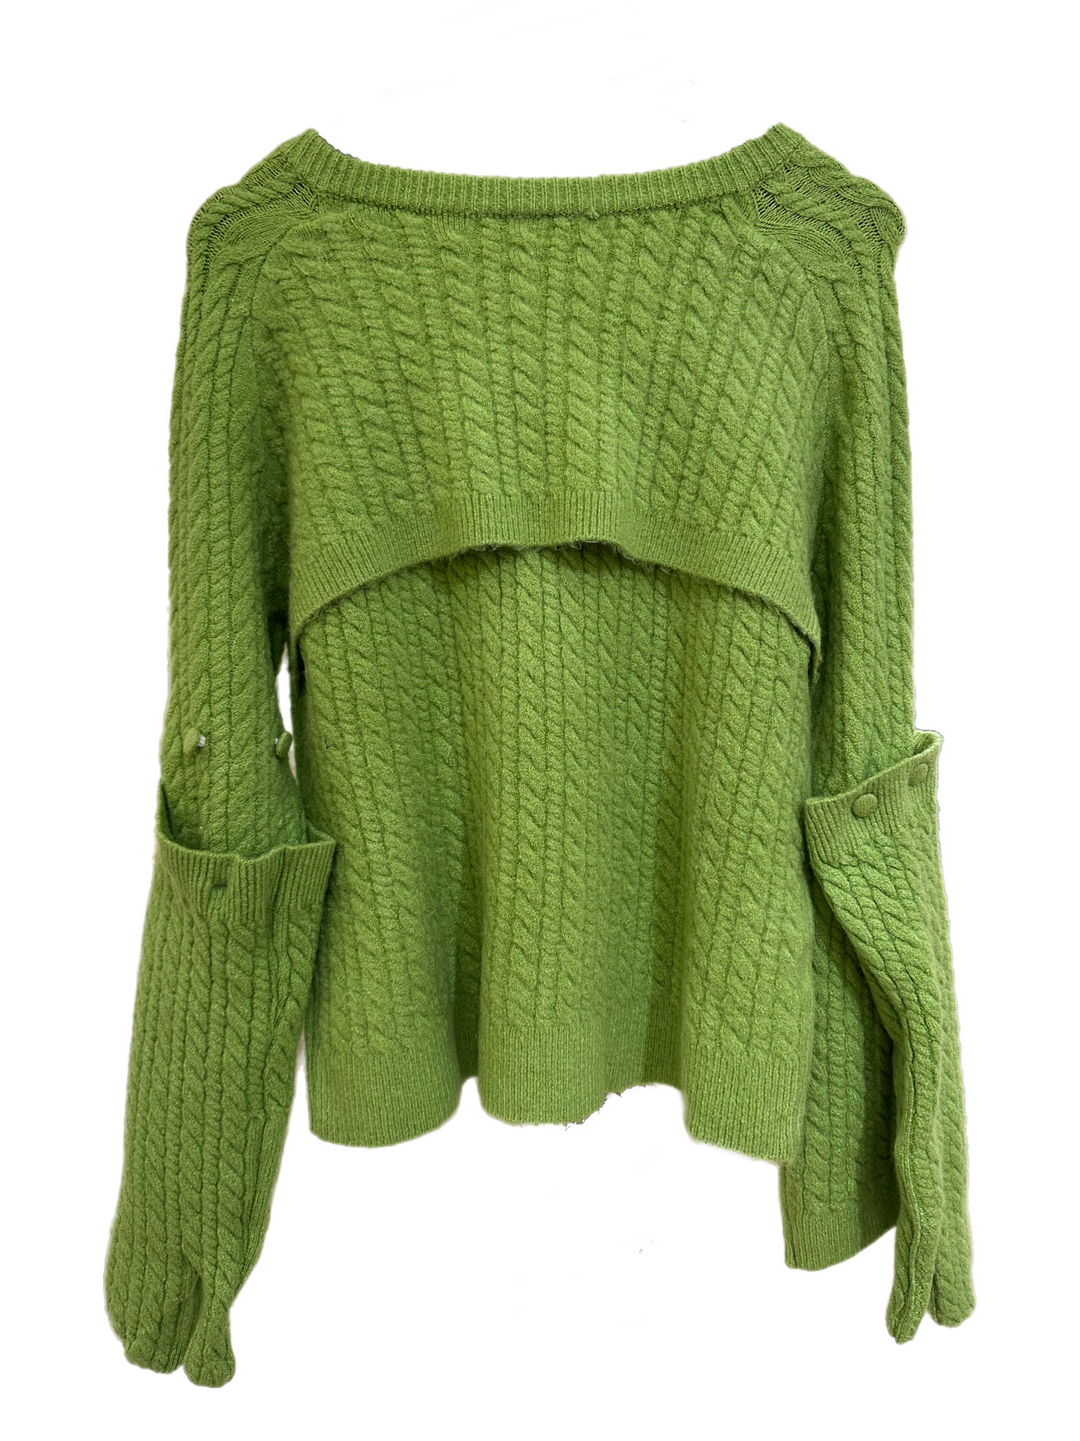 3NY - 8ibg Cabel knit sweater